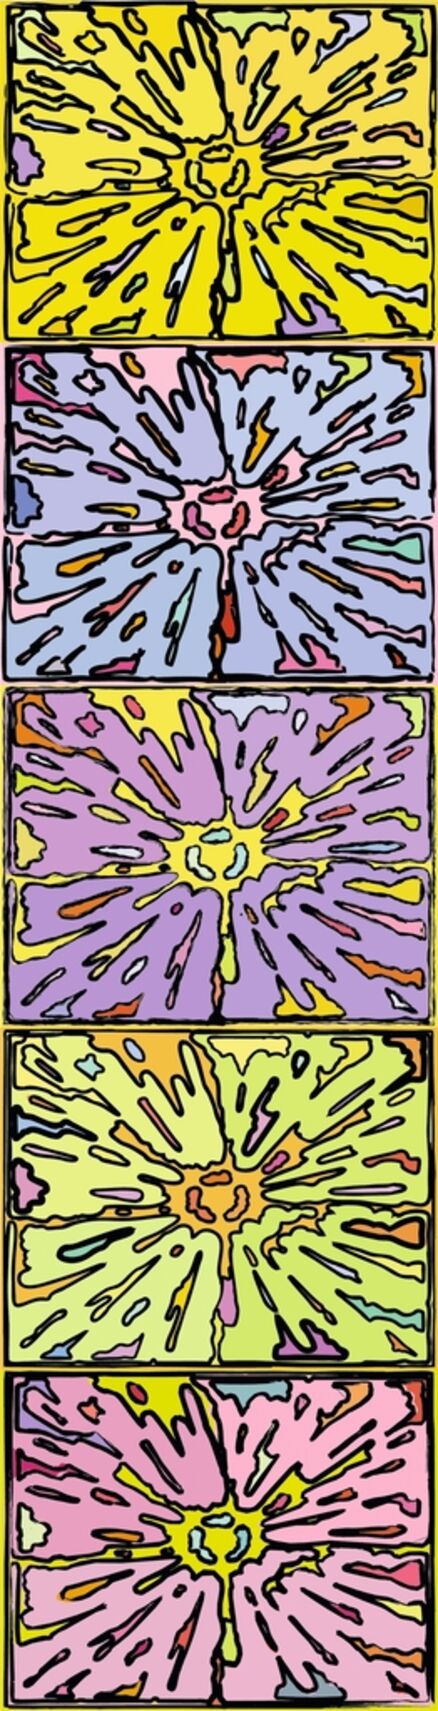 Peter Halley, ‘Cartoon Explosion’, 2009